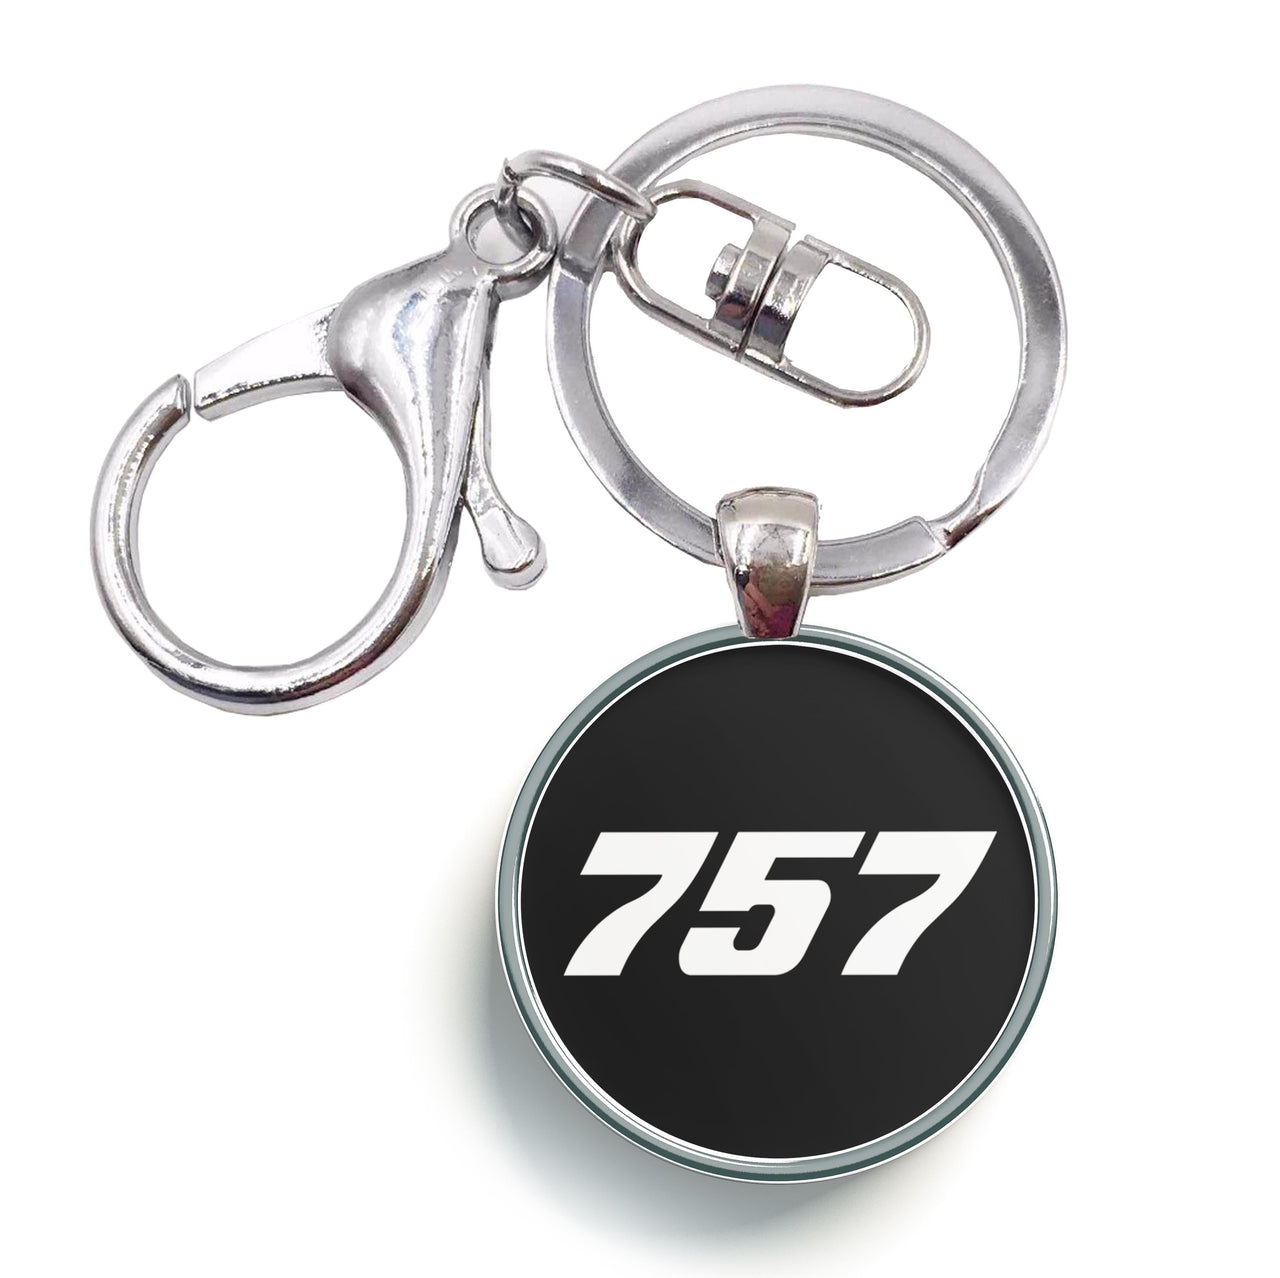 757 Flat Text Designed Circle Key Chains